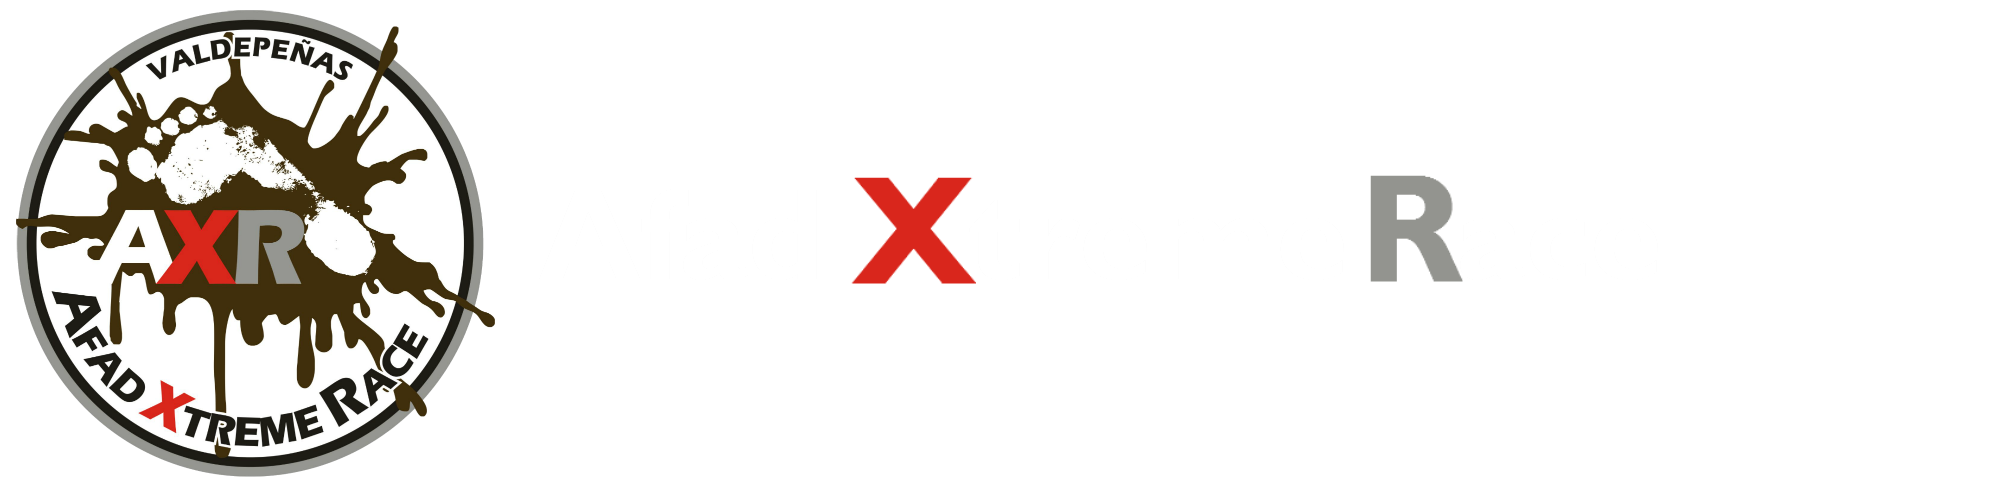 Afad Xtreme Race